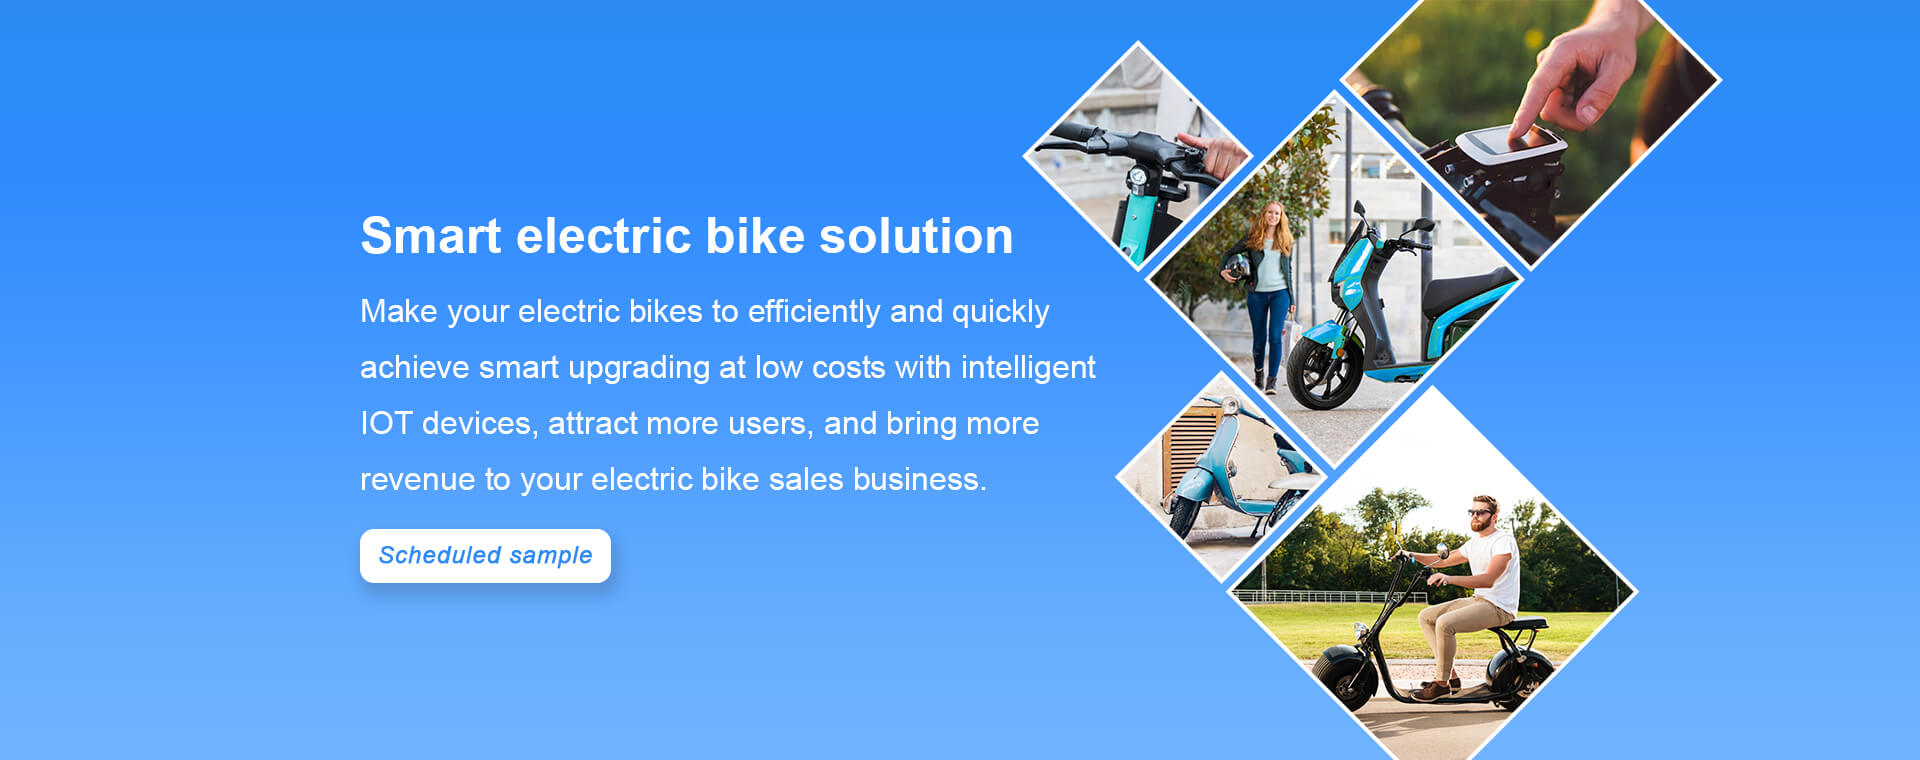 smart electric bike